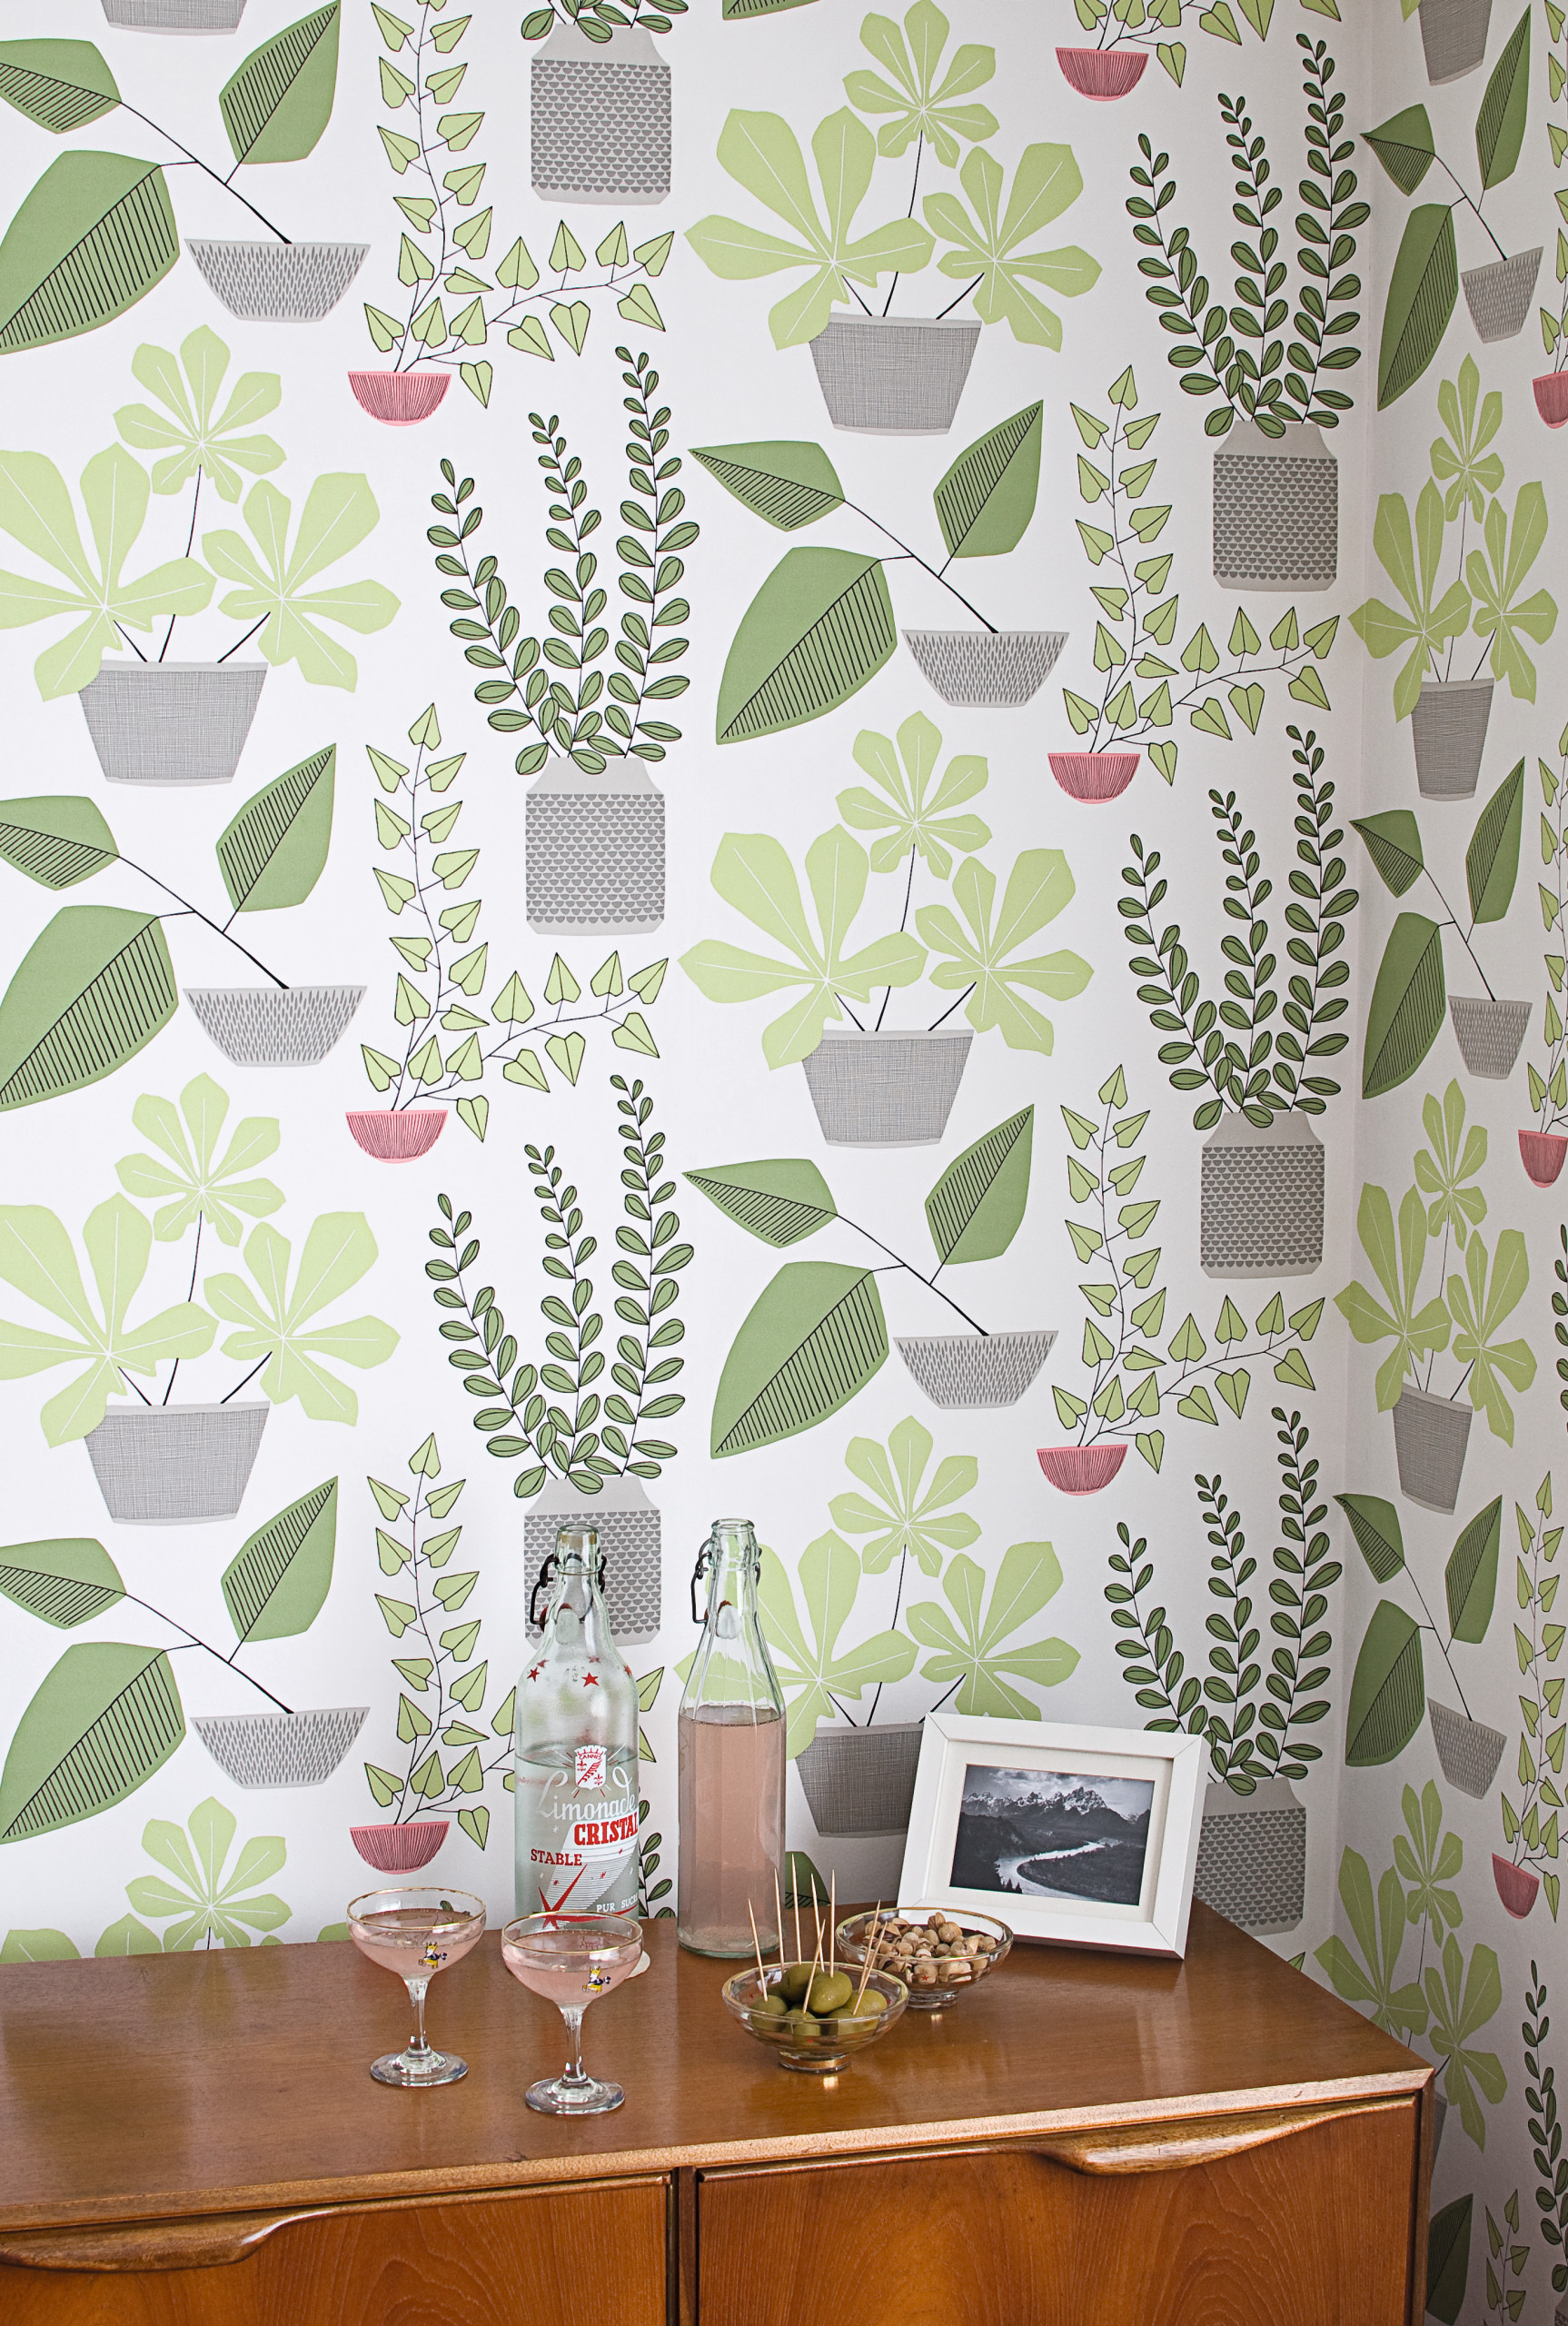 Tapet - Miss Print 4 - Living Room - Gothenburg - by Midbec | Houzz